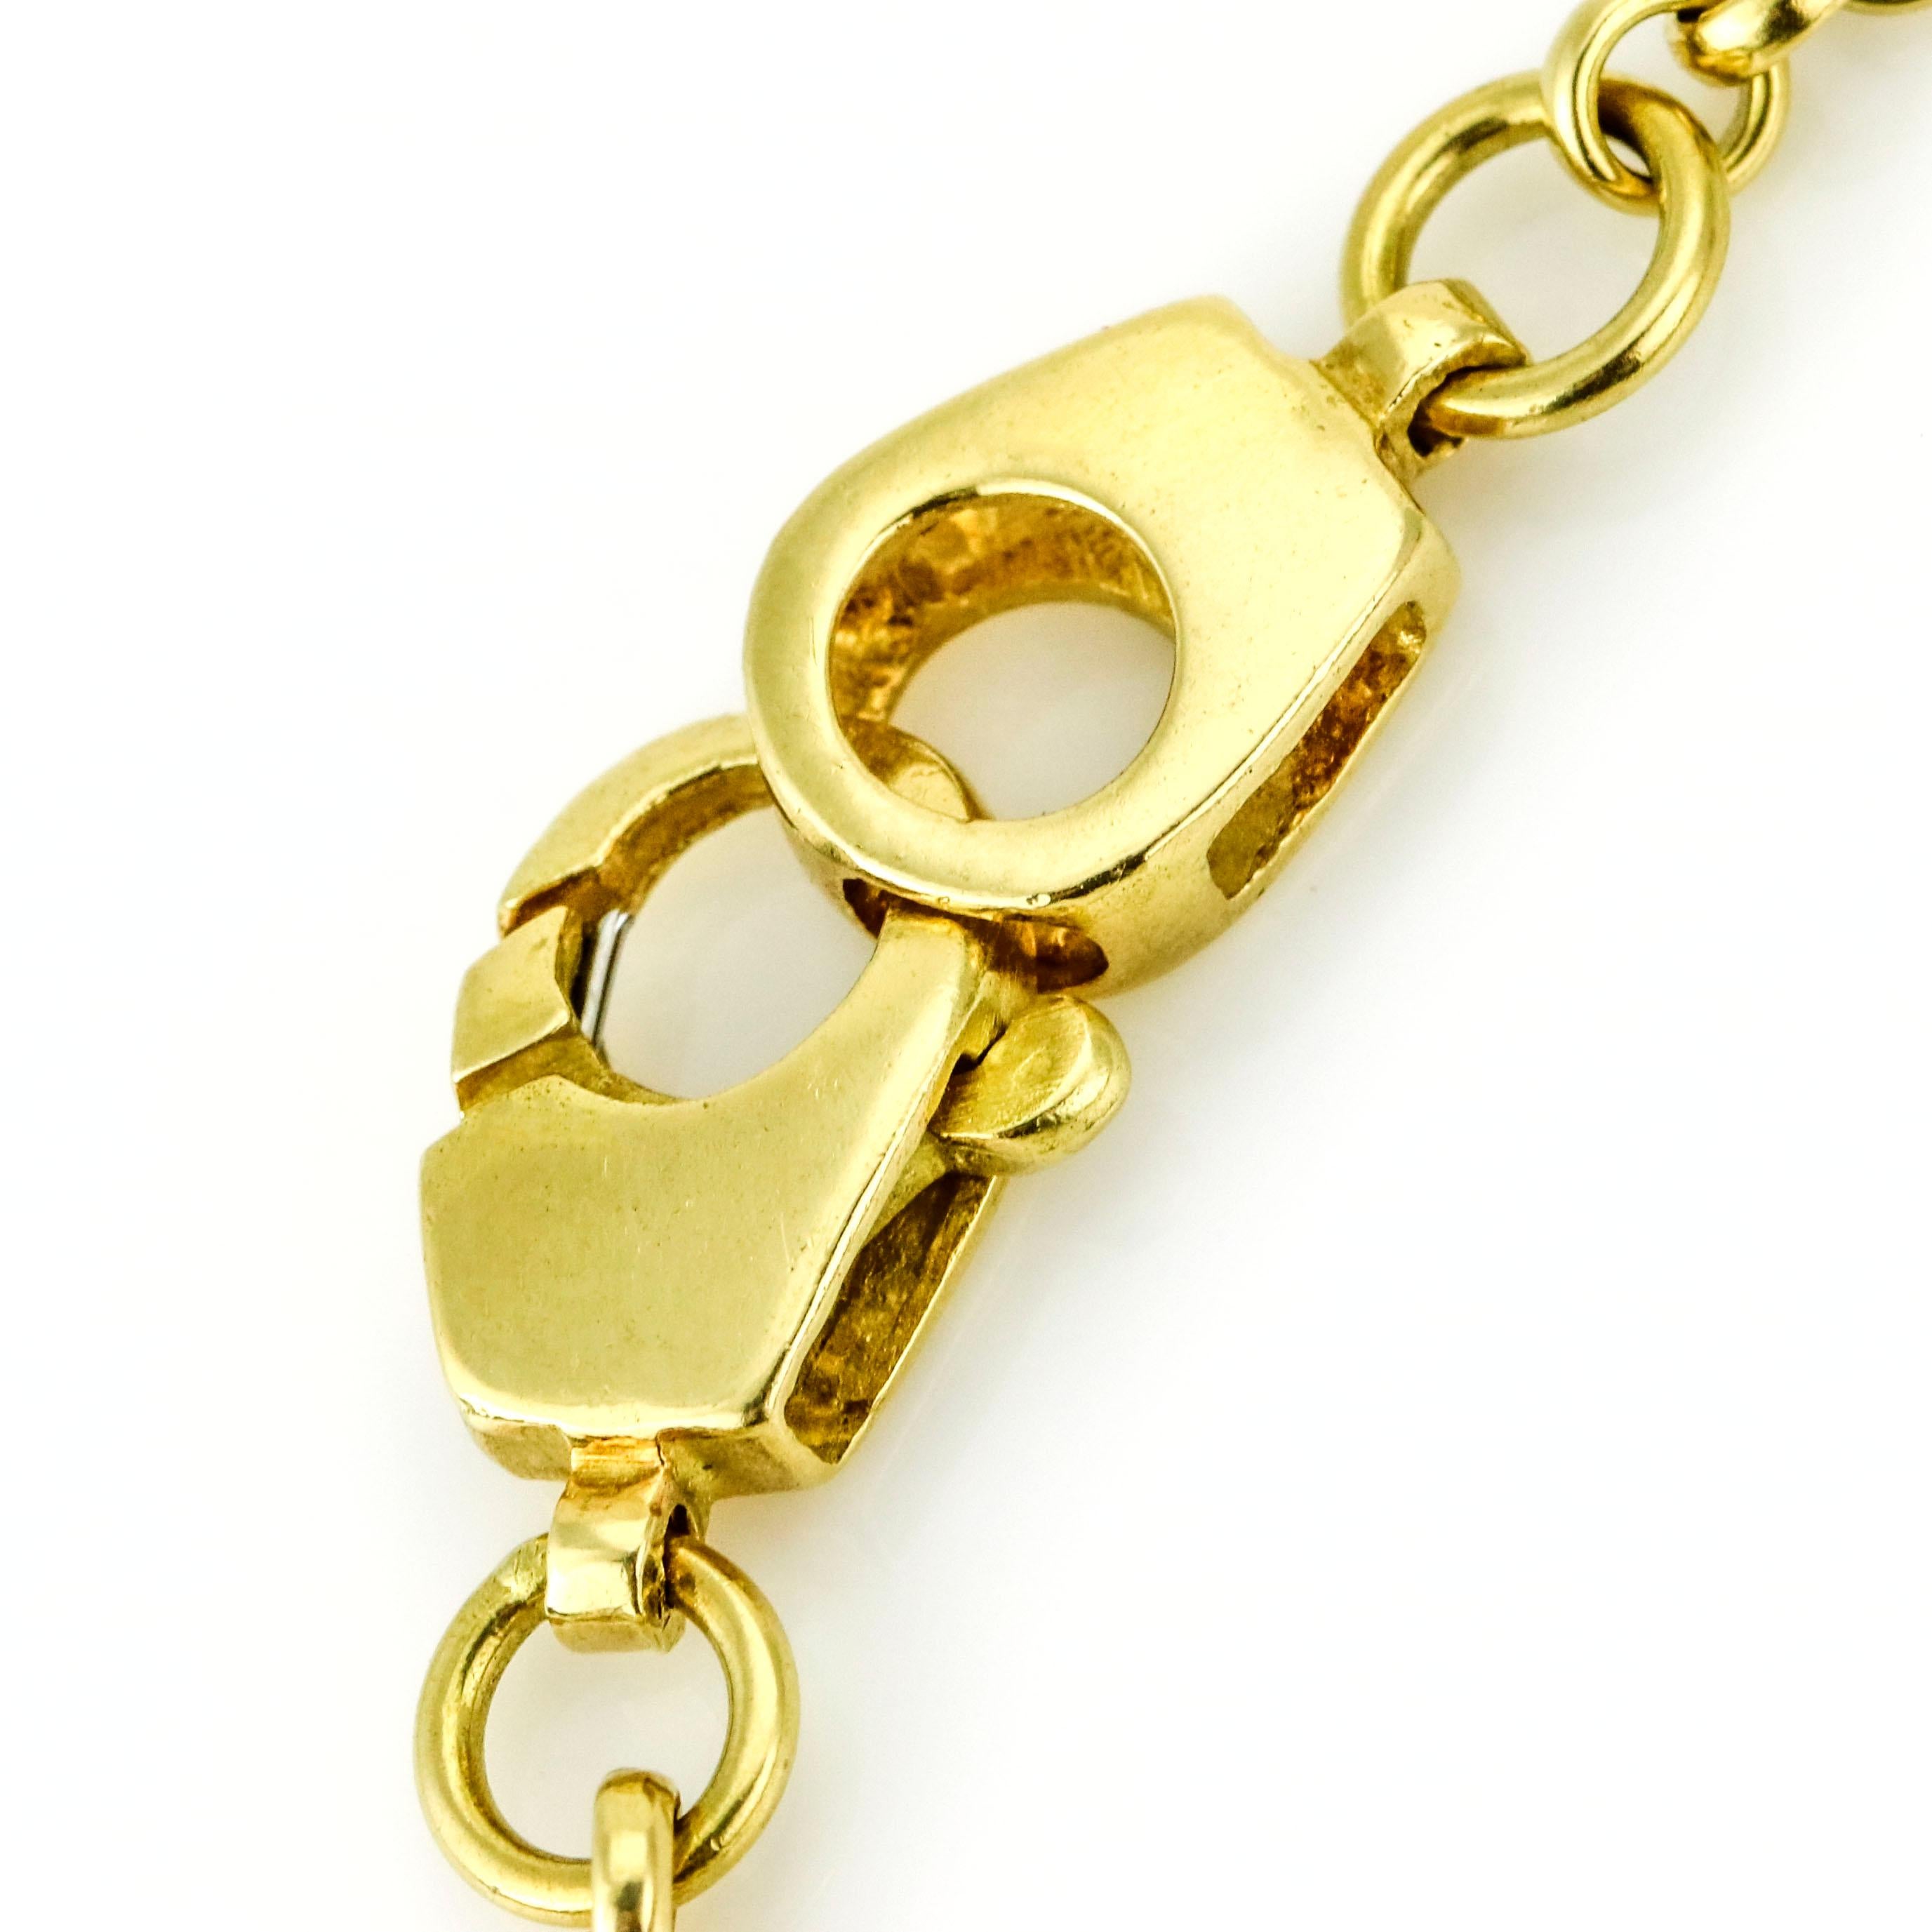 39.34 Carat 18 Karat Yellow Gold Rubellite Tourmaline Diamond Pendant Necklace For Sale 6